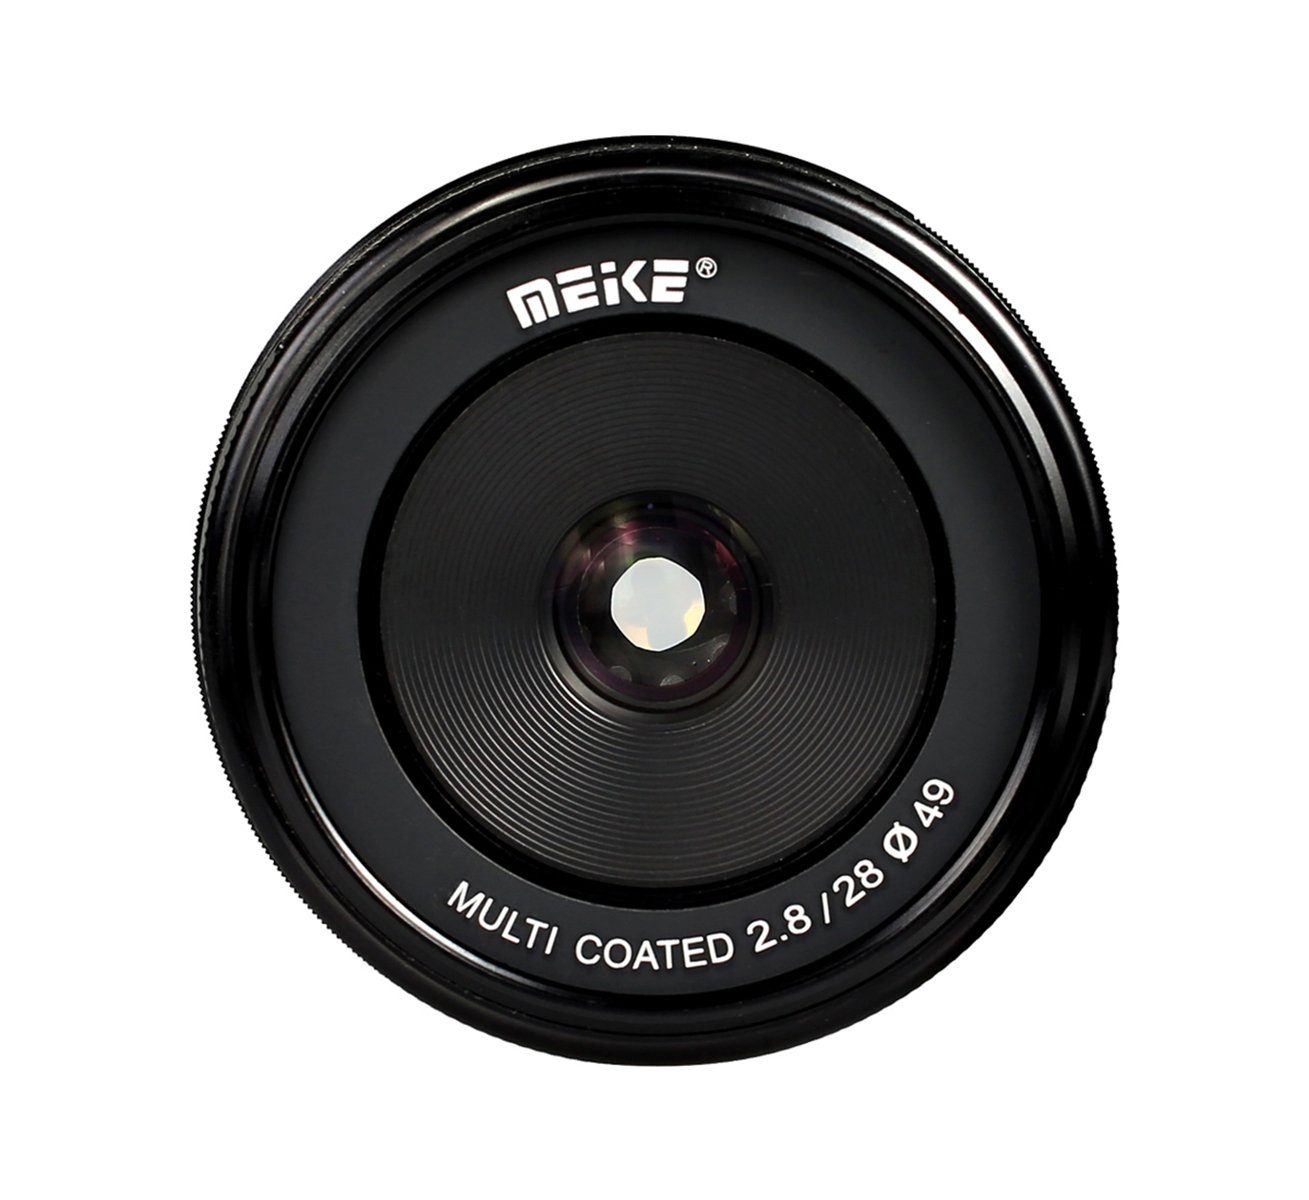 Meike Meike für multicoated 28mm Objektiv E-Mount Objektiv Sony F2.8